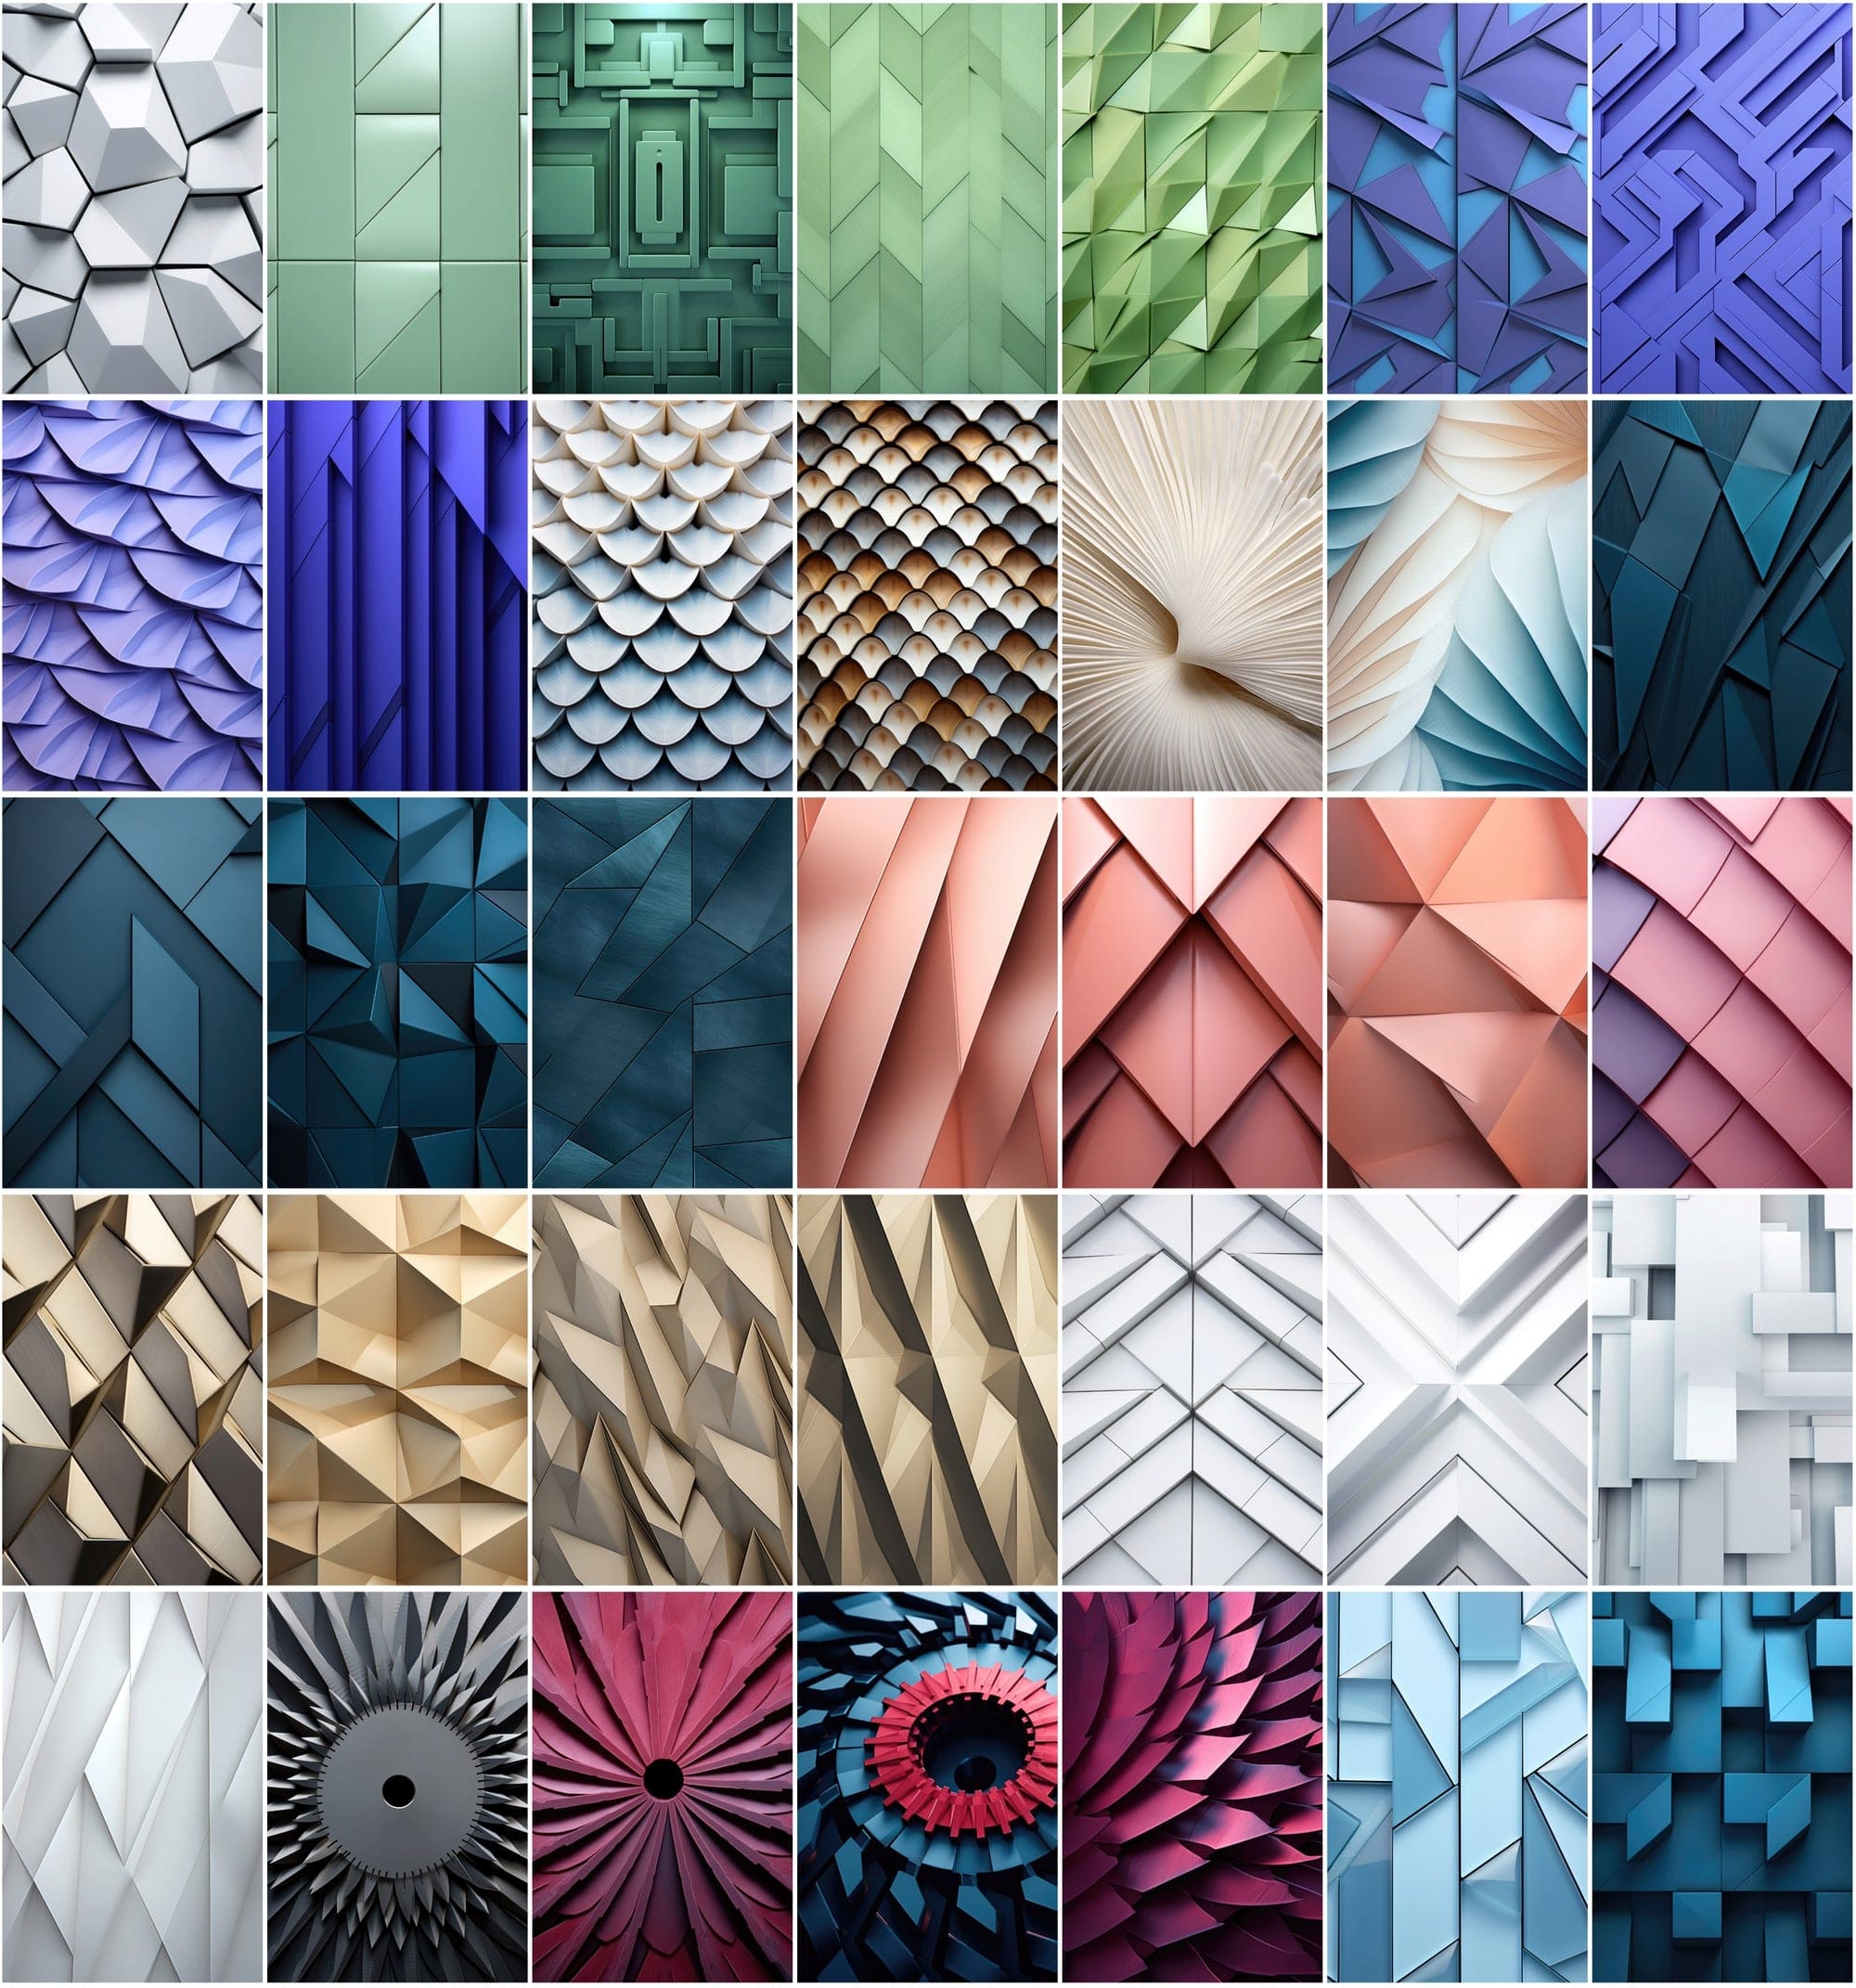 Futuristic 420 JPG Backgrounds Bundle with Commercial License, Colorful Square Images Digital Download Sumobundle